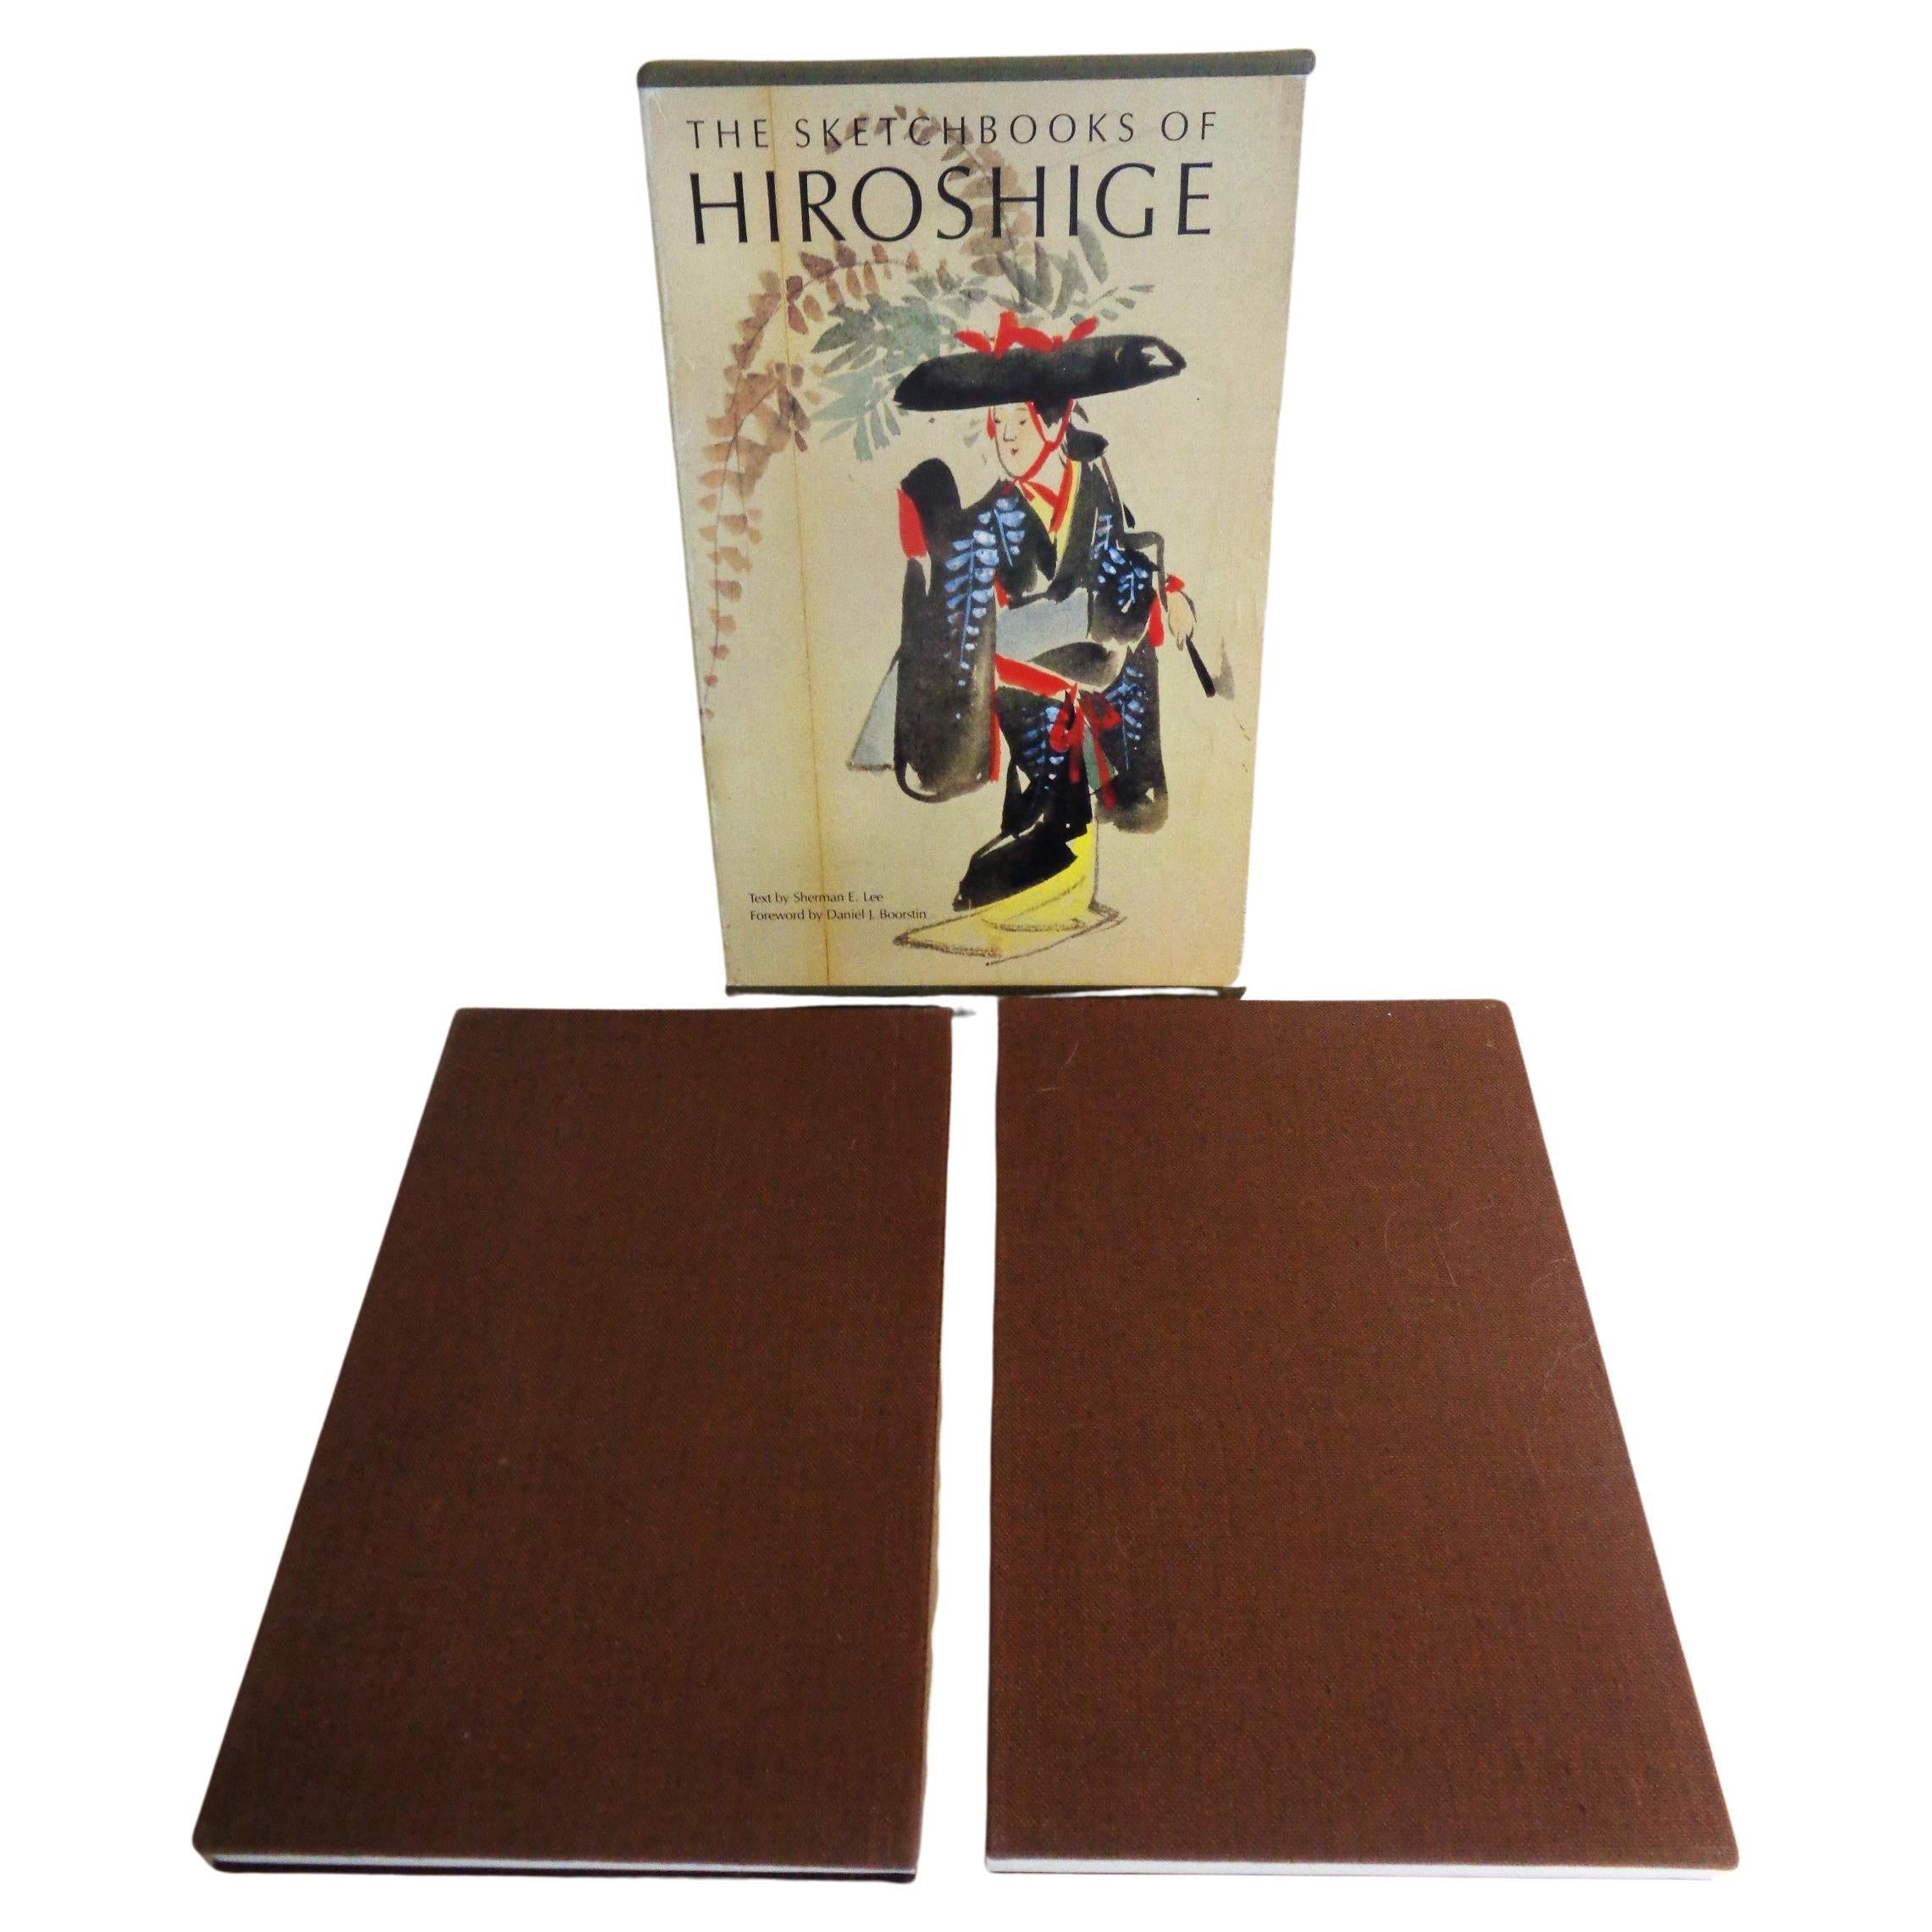 The Sketchbooks of Hiroshige, 1984 George Braziller - 1st Edition 3